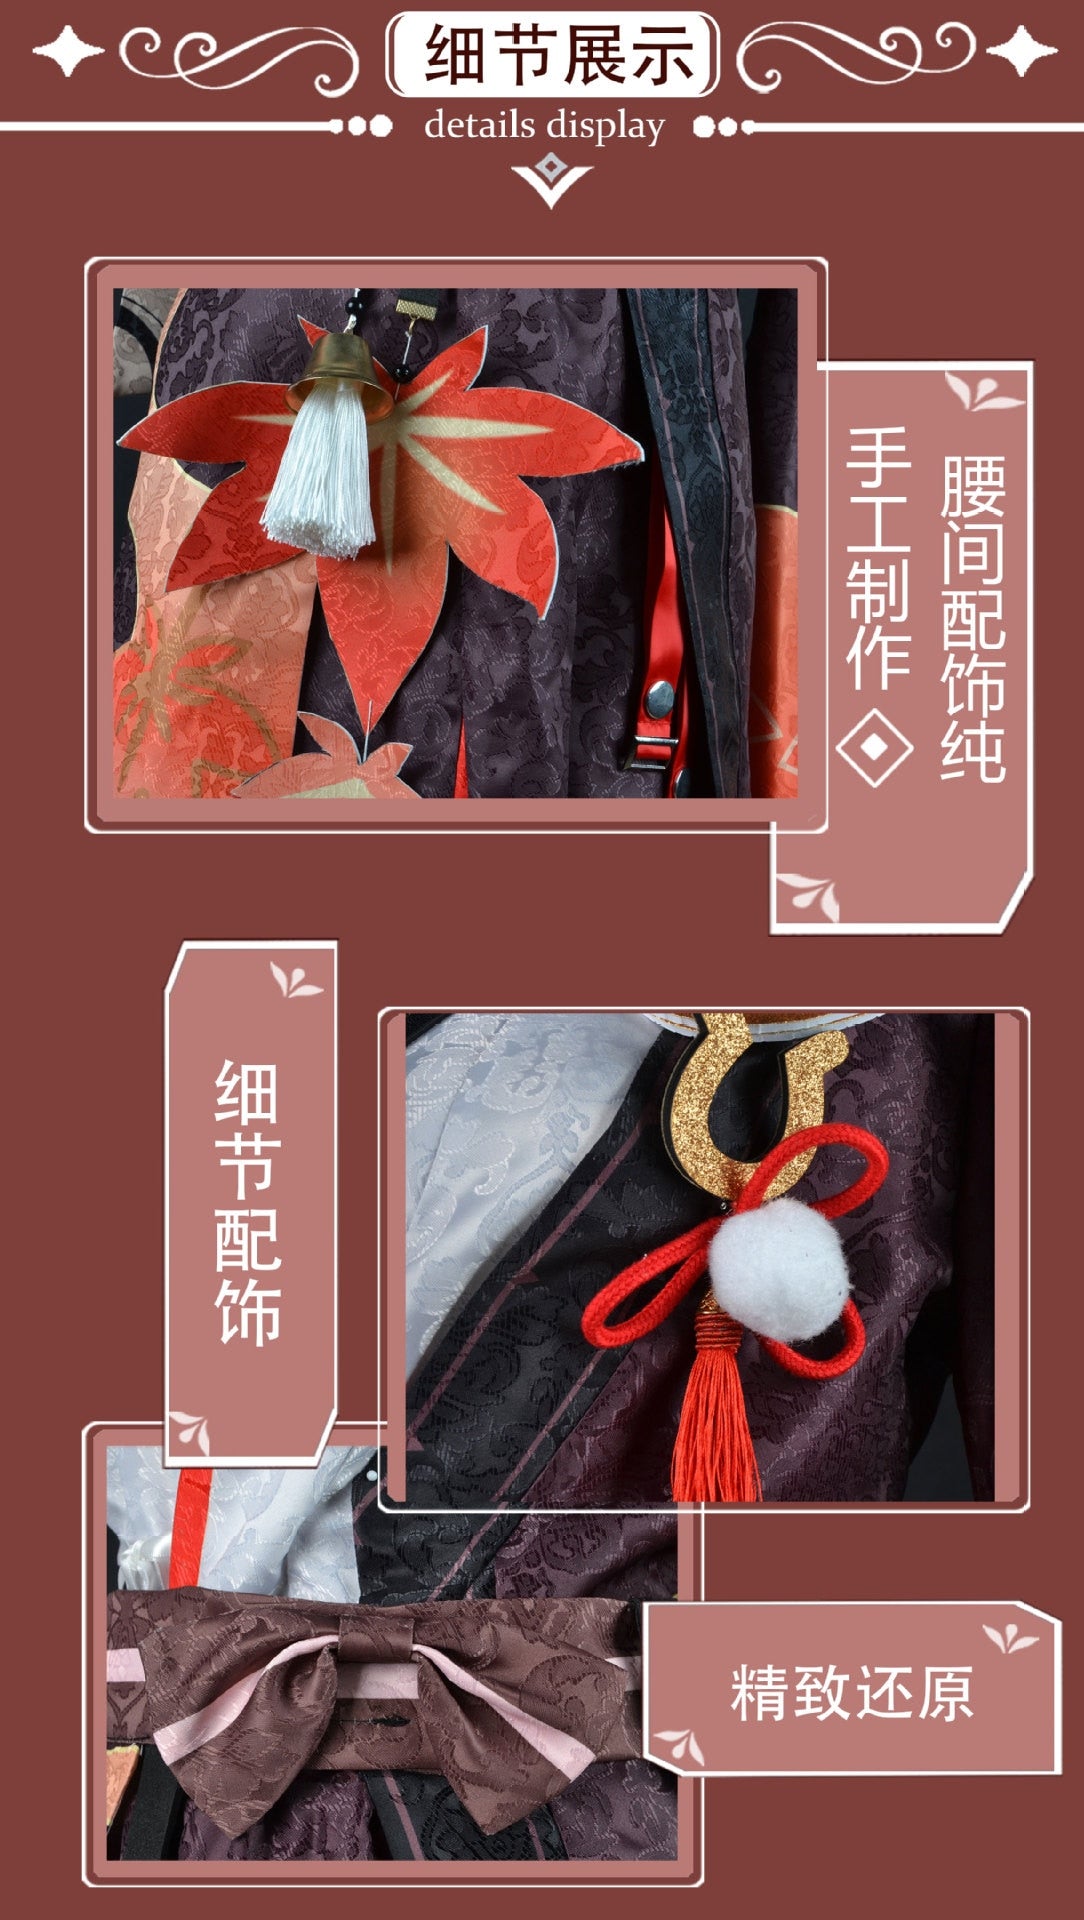 Kaedehara Kazuha Cosplay Costume Genshin Impact Cos Carnival Samurai Costume Set Wig Red Glasses-Genshin Impact - MoonCos